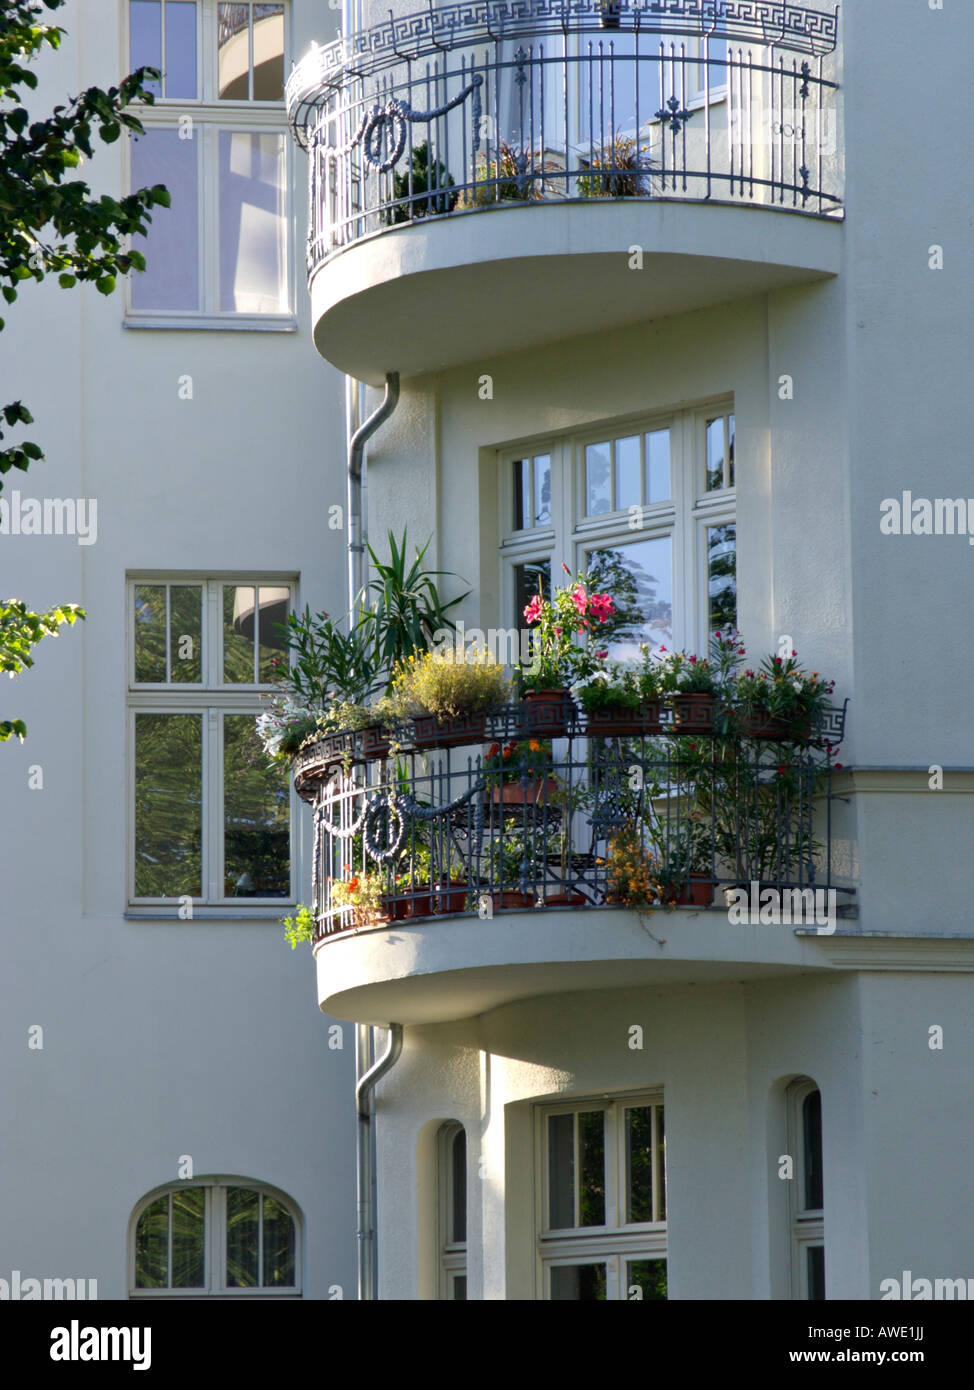 Residential building with balcony, Potsdam, Germany Stock Photo